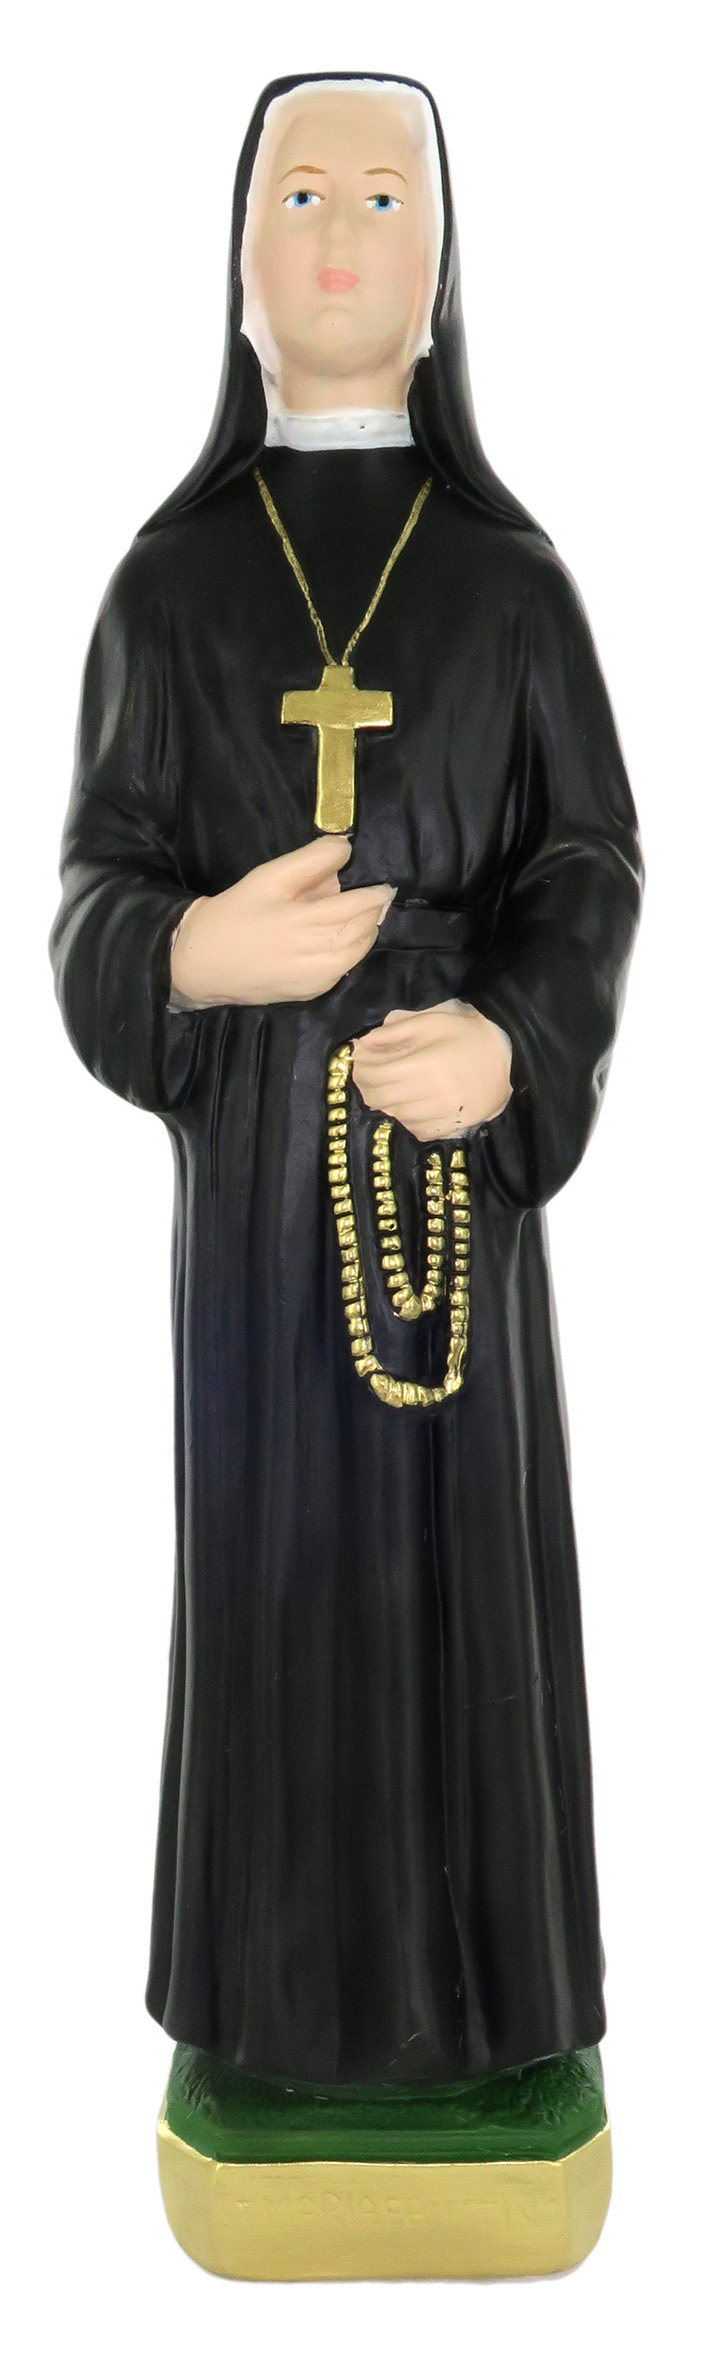 Dipinta a Mano. Proposte Religiose Statua Santa Faustina Kowlaska in Resina Altezza cm 22 